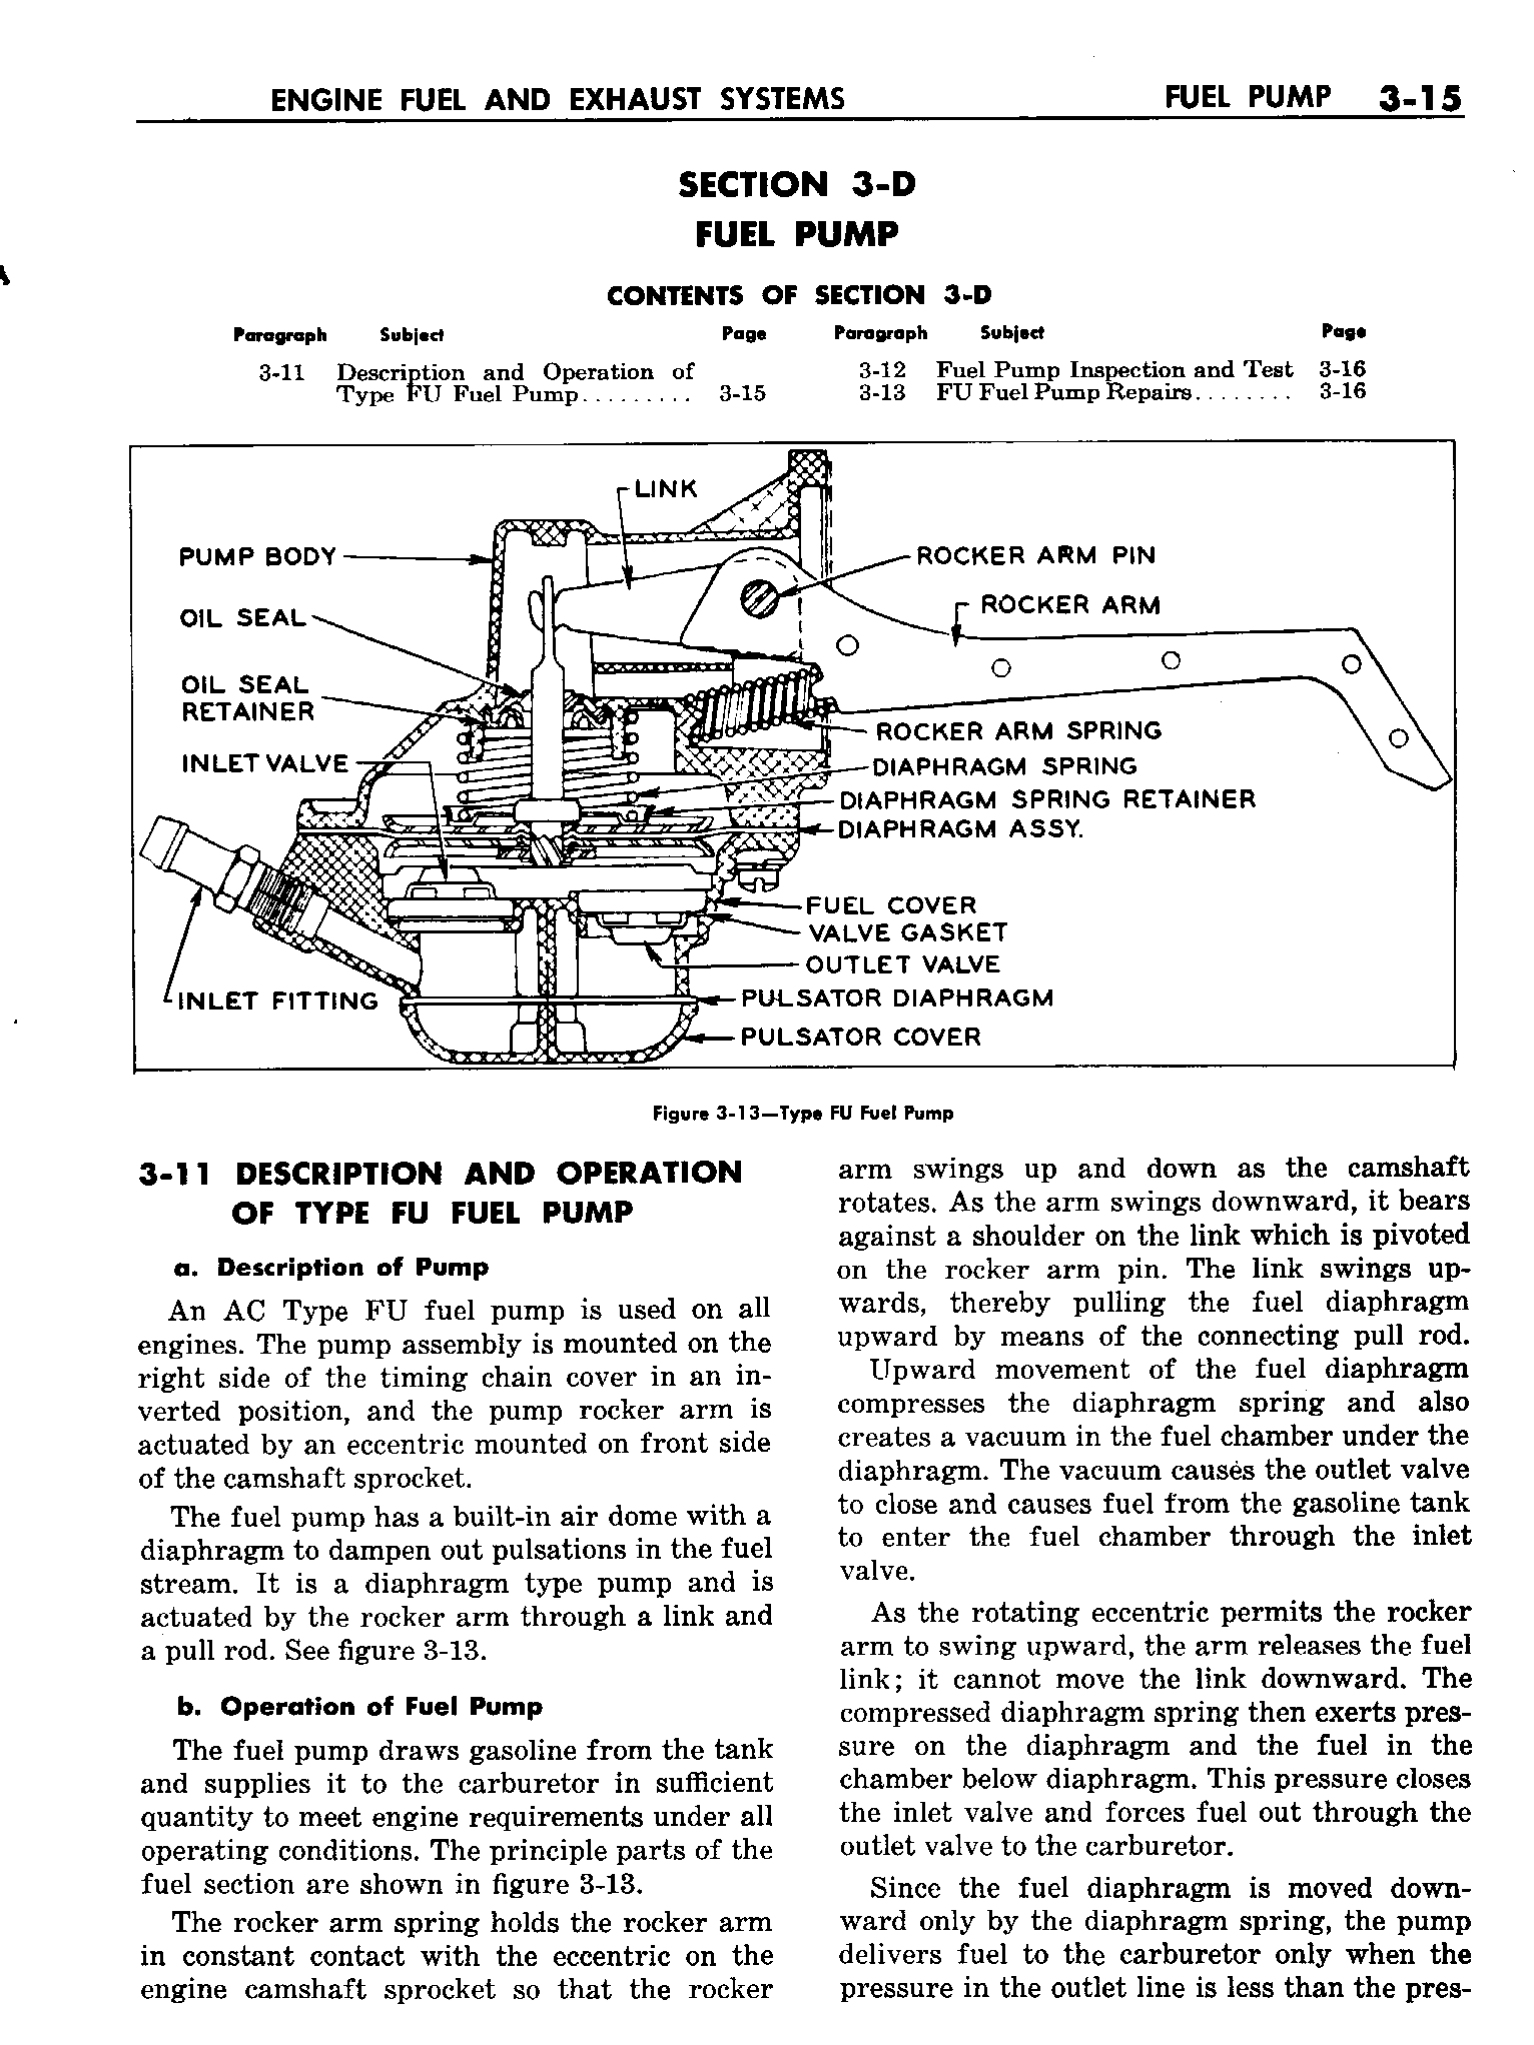 n_04 1958 Buick Shop Manual - Engine Fuel & Exhaust_15.jpg